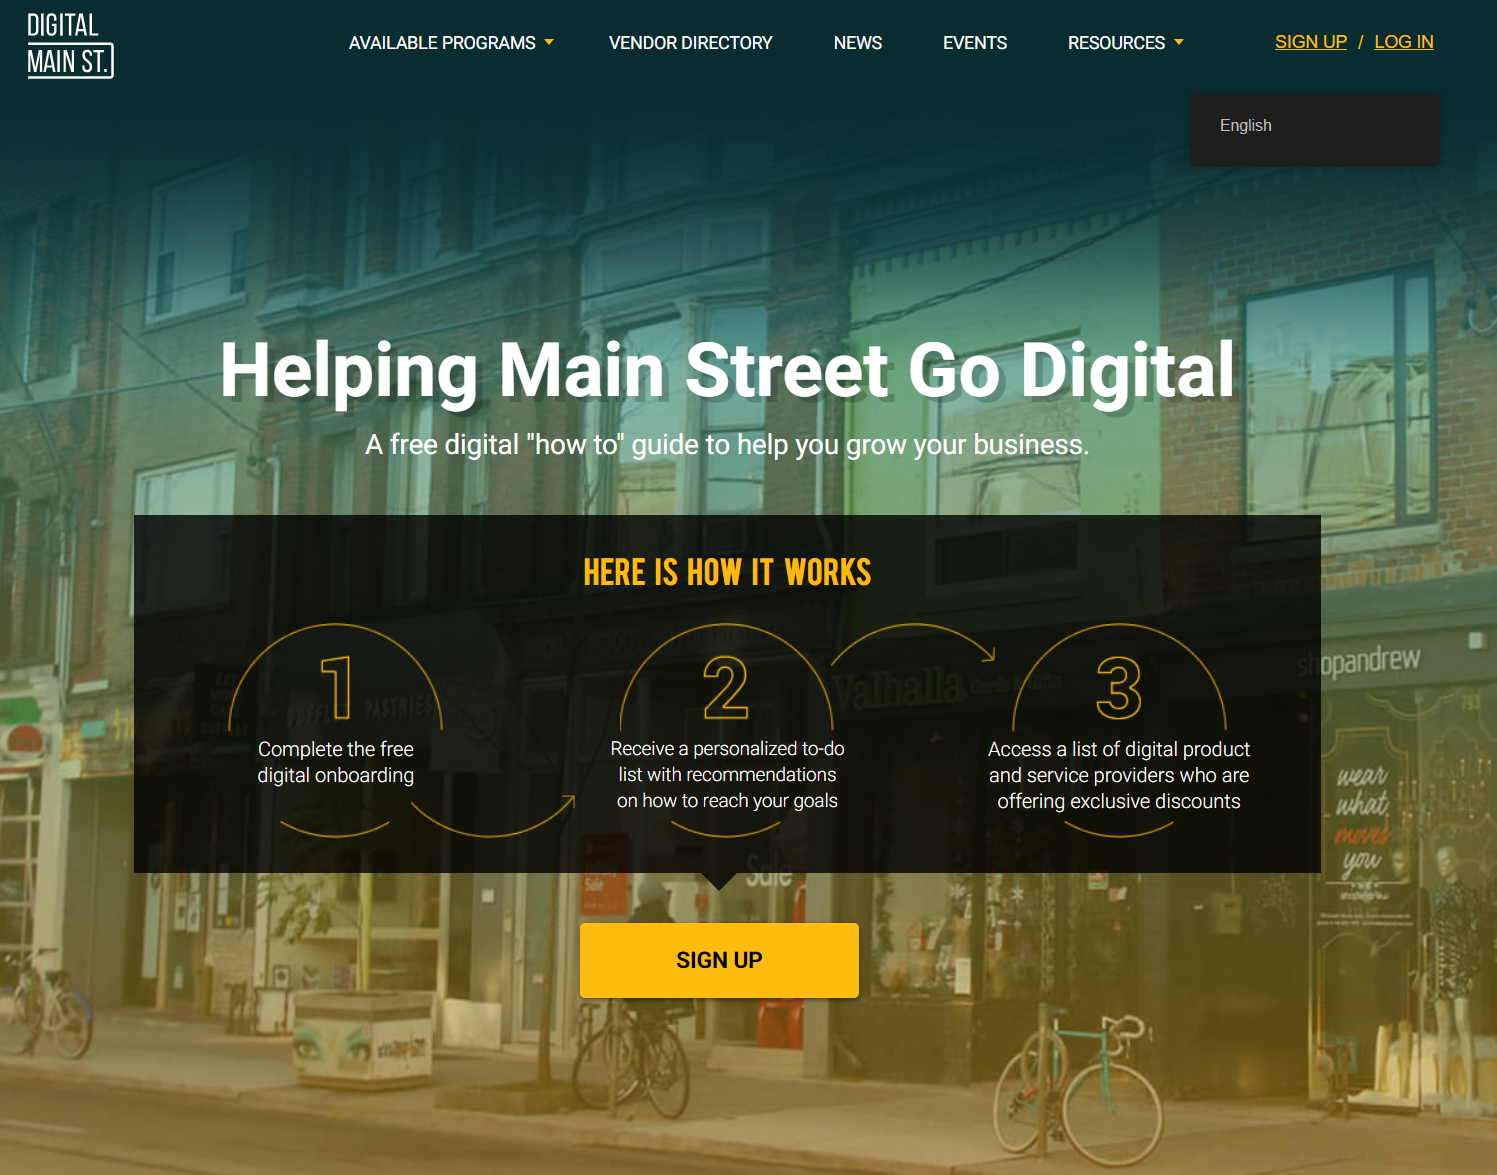 Digital Main Street offering grants to Ontario Businesses